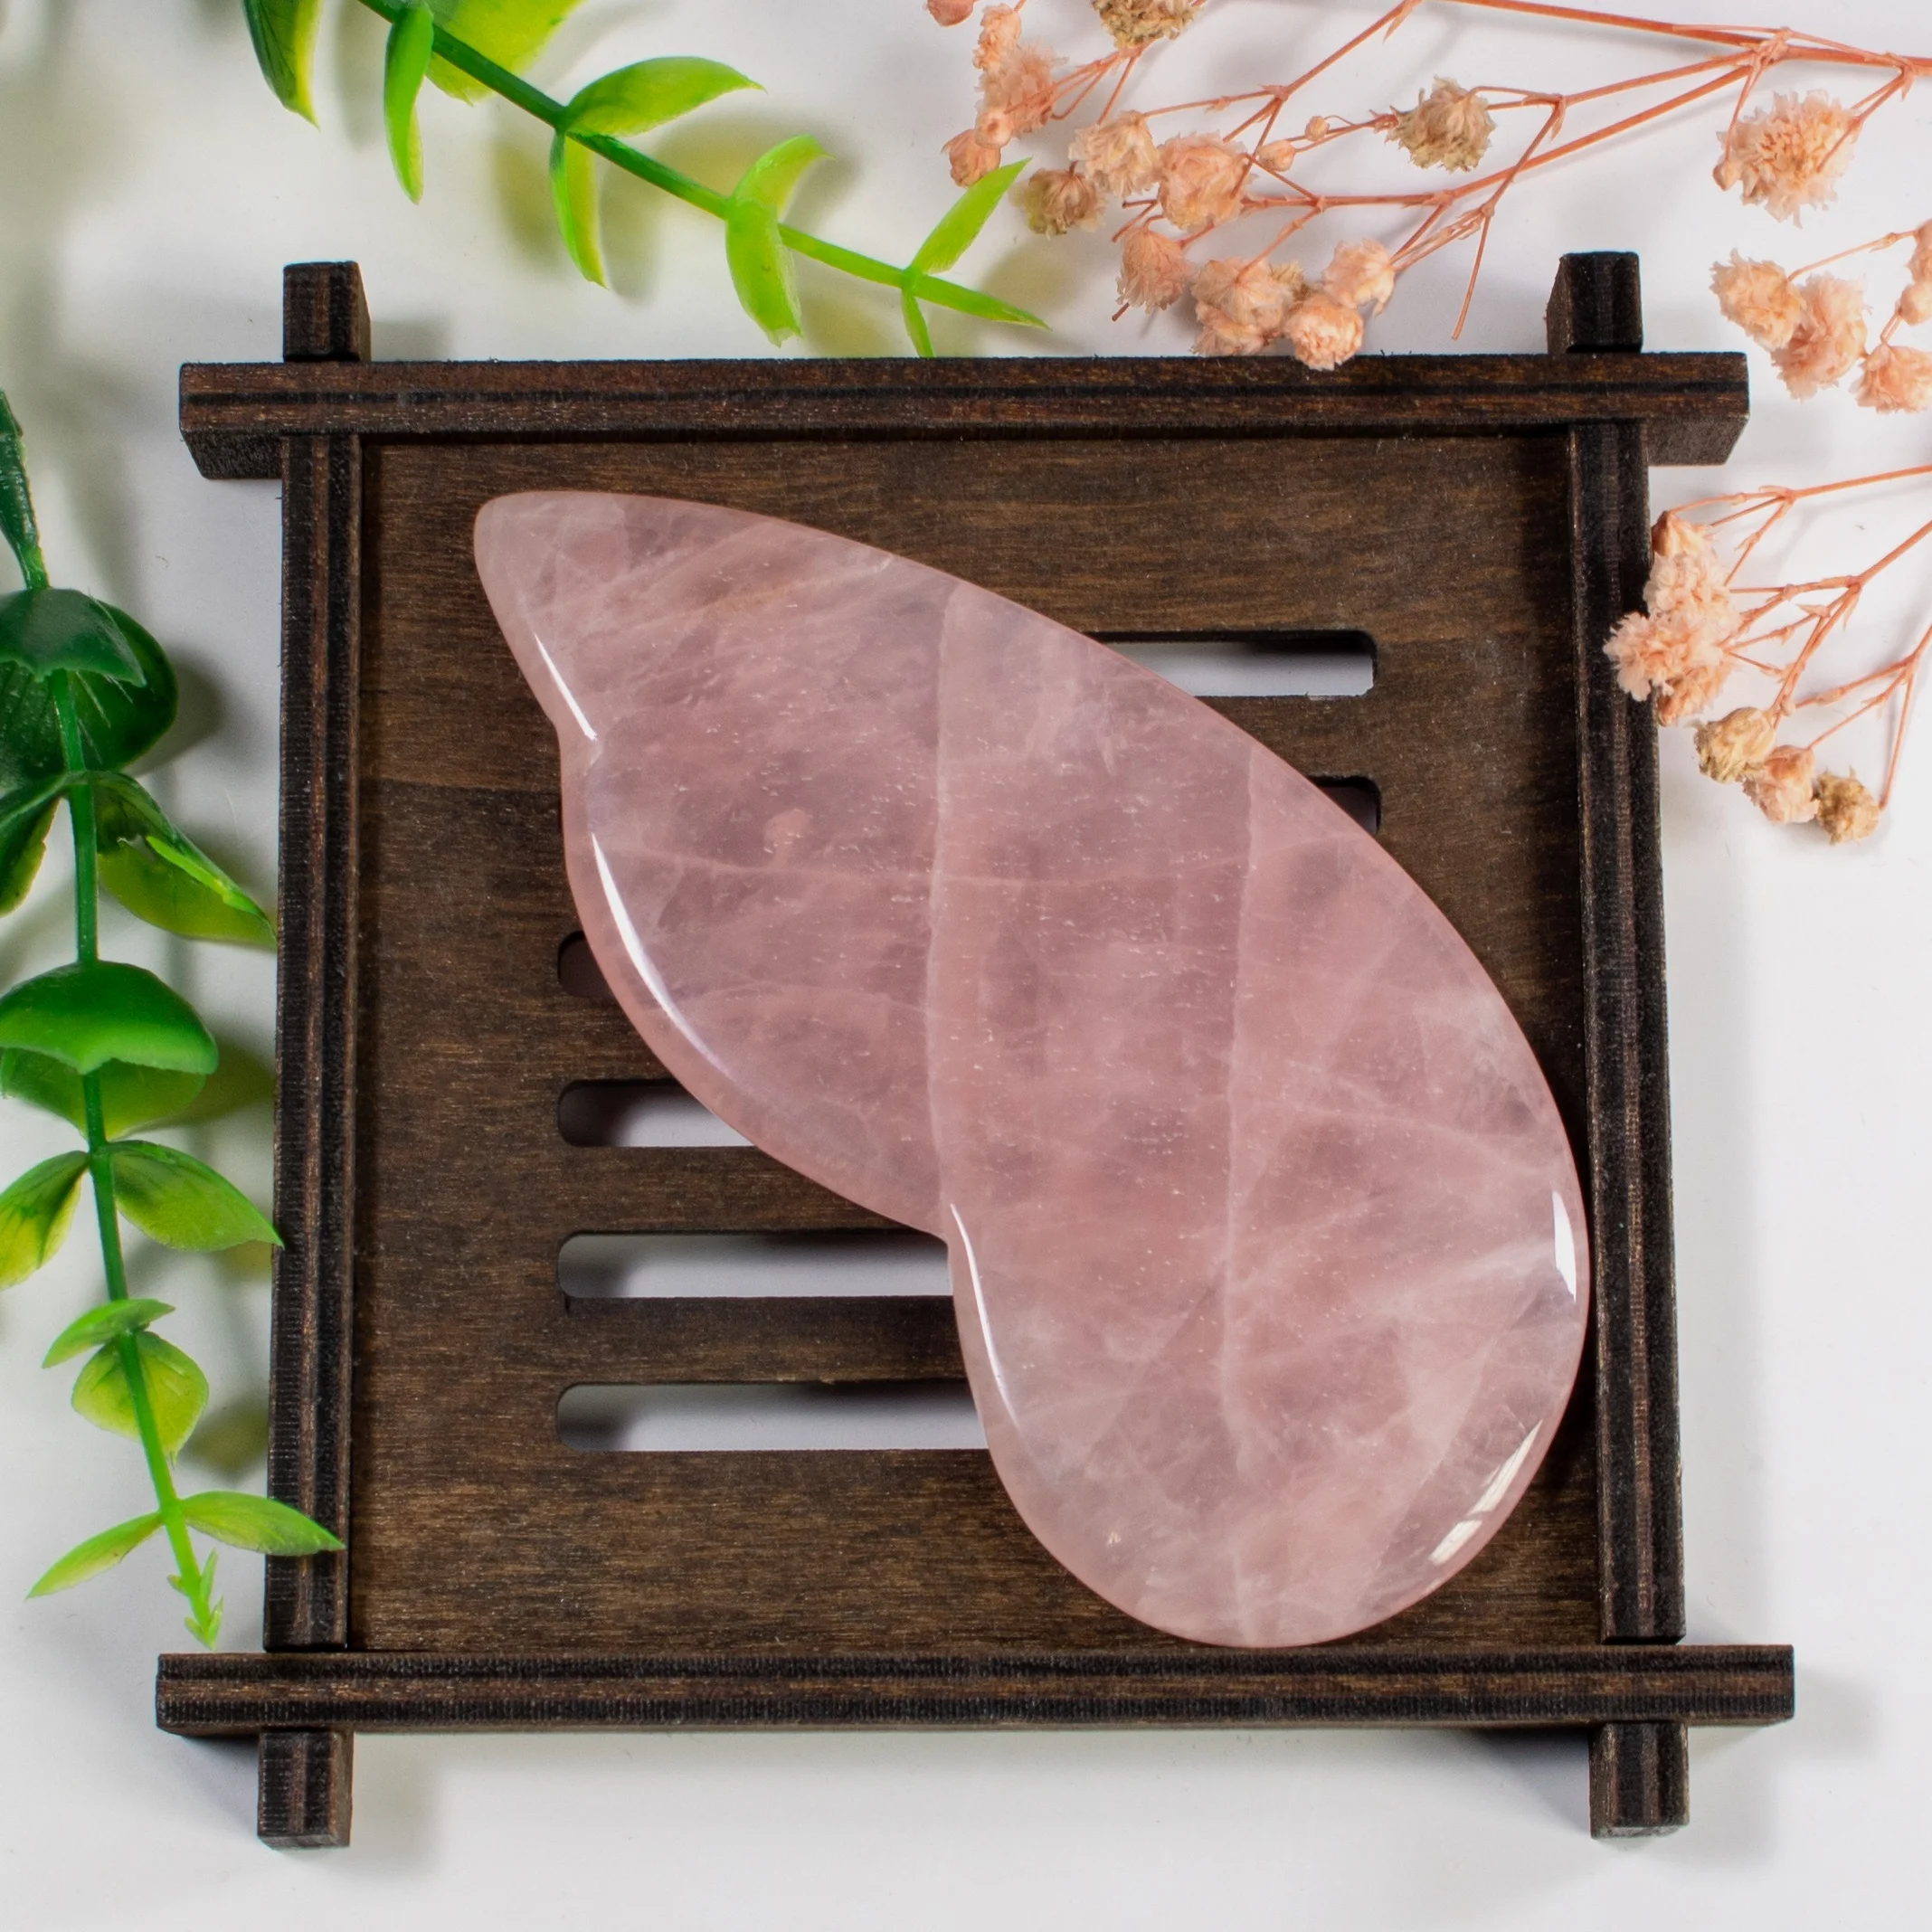 

Jade roller gua sha guasha board scraping massage tool Natural Wing shape crystal rose quartz gua sha for Home, Pink